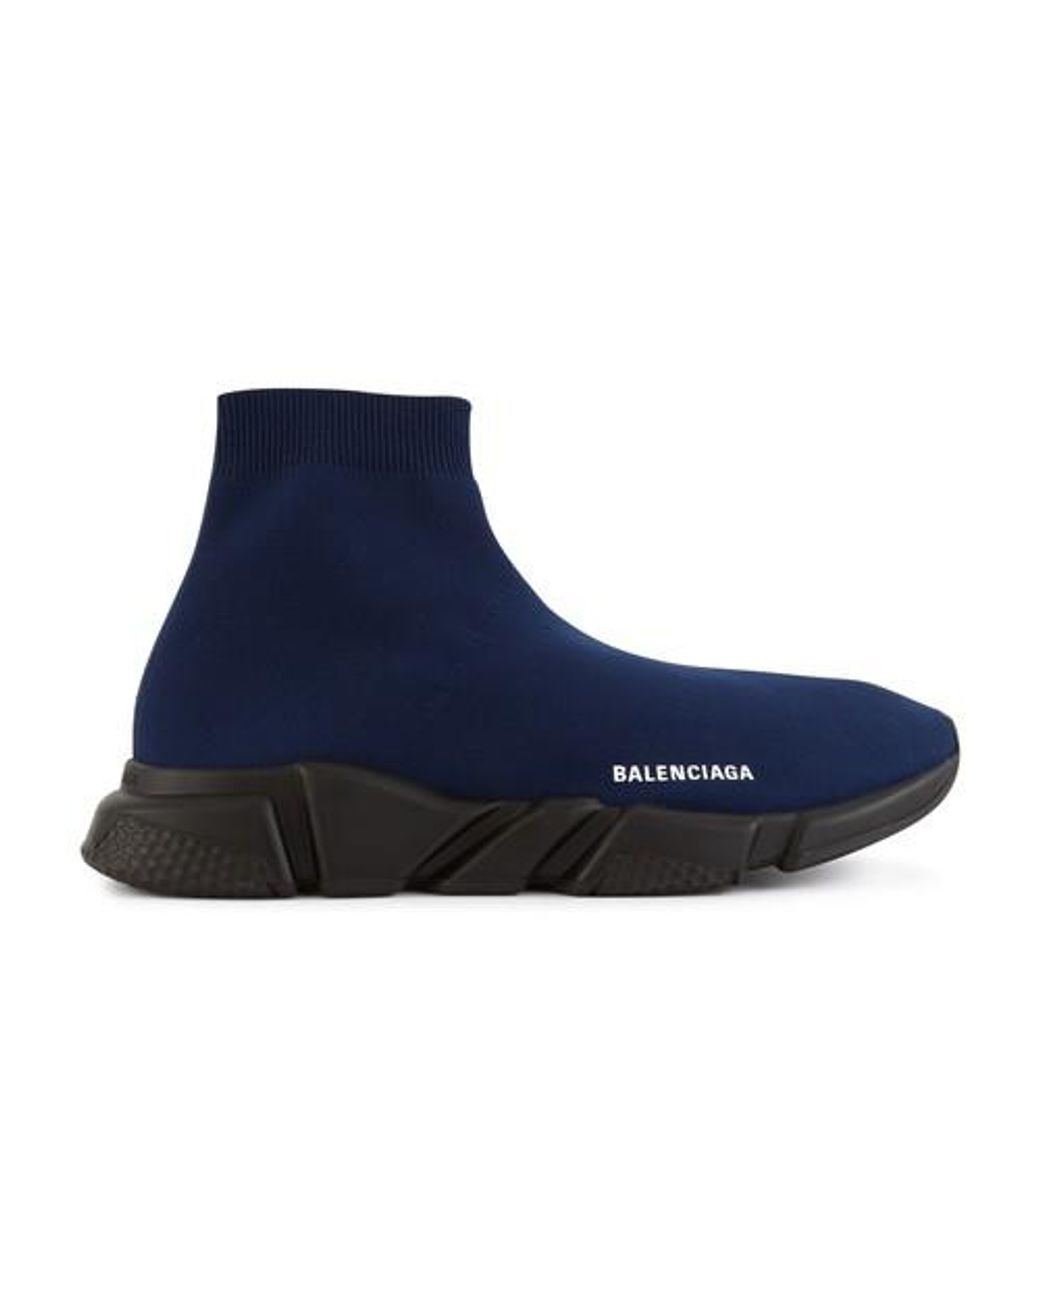 Balenciaga  Shoes  Balenciaga Speed Trainer Black And Blue  Poshmark